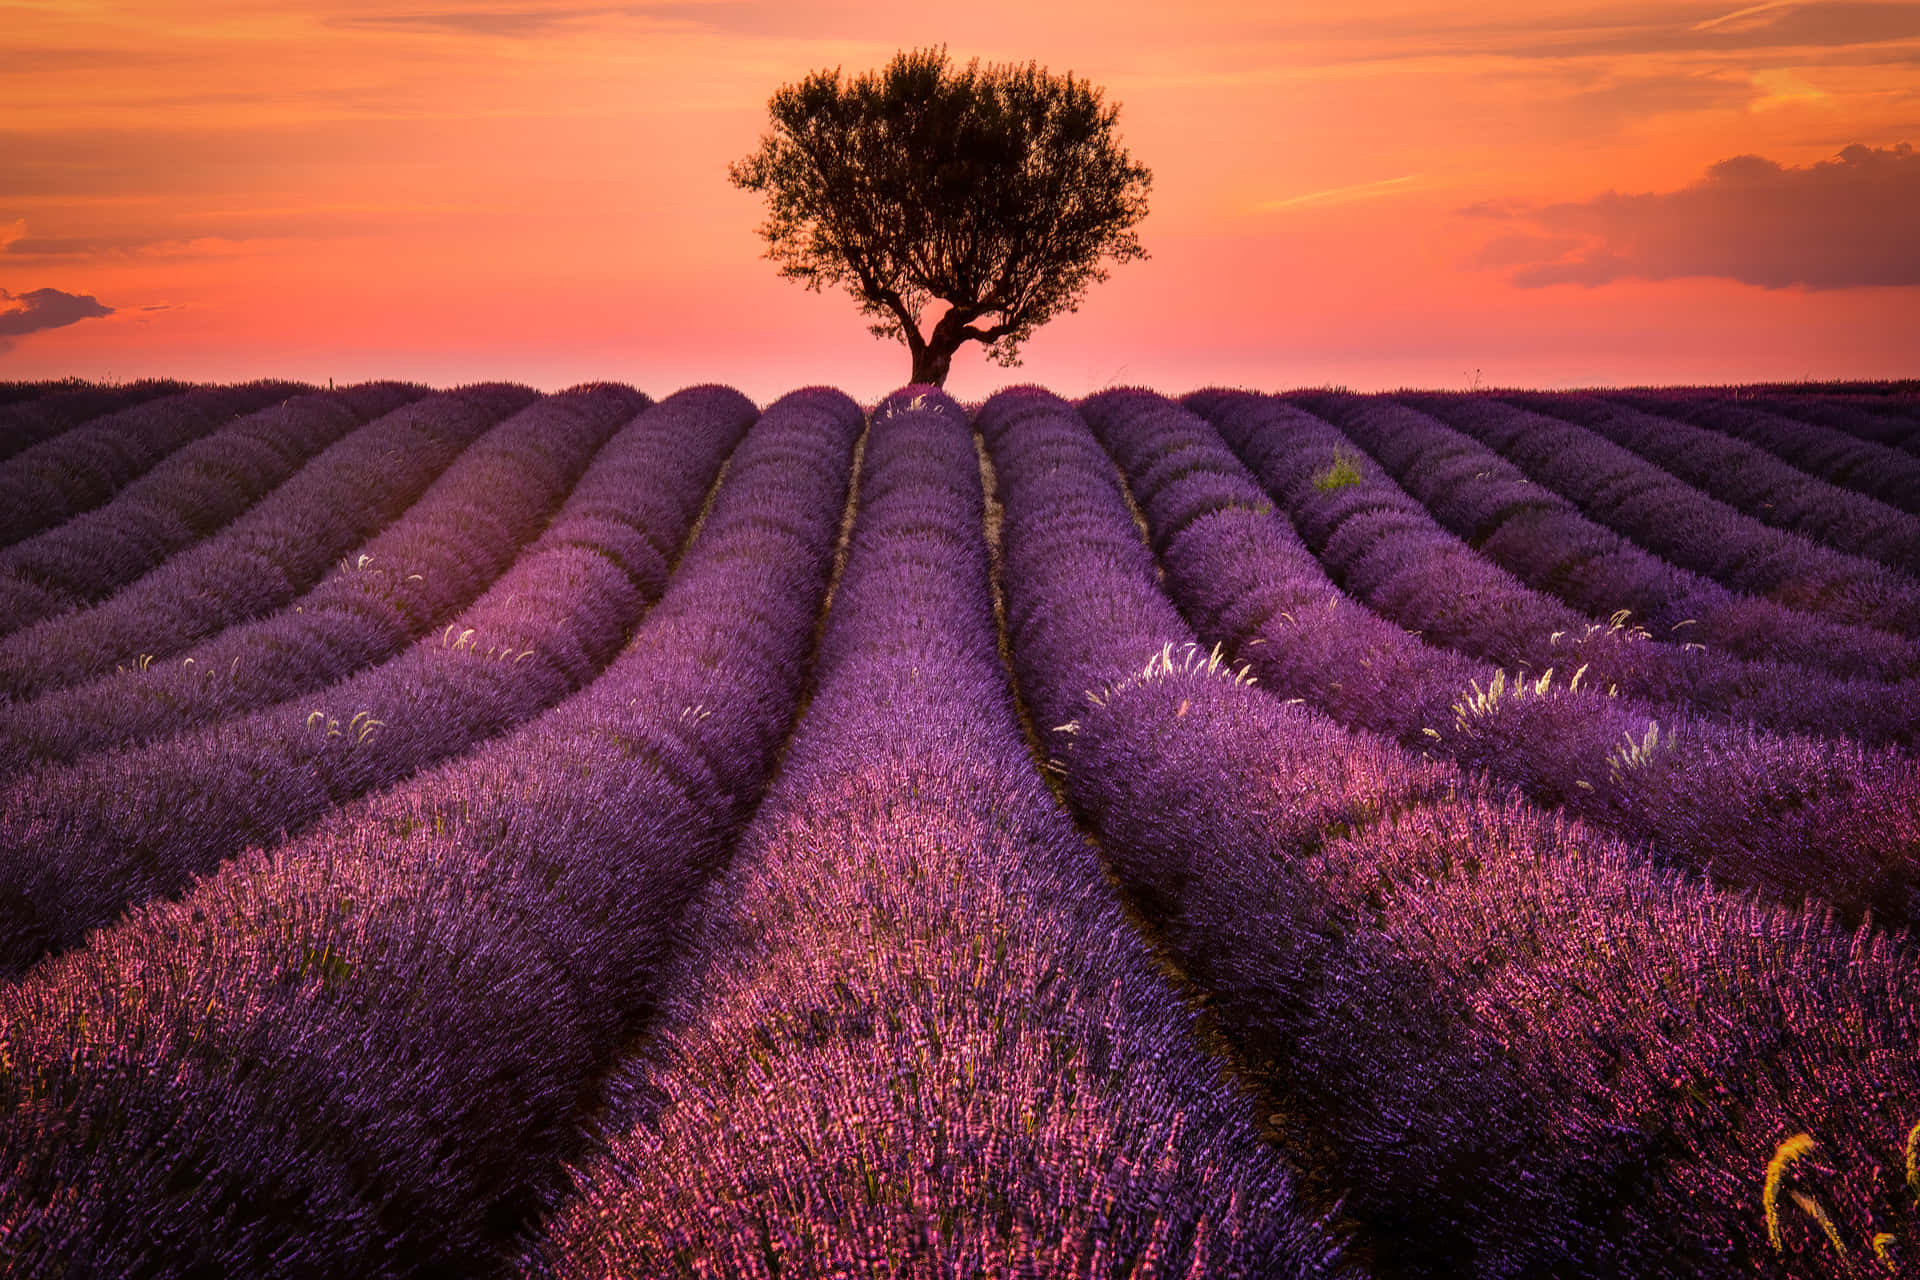 Download Lavender Field Under Peach Dusk Skies Wallpaper